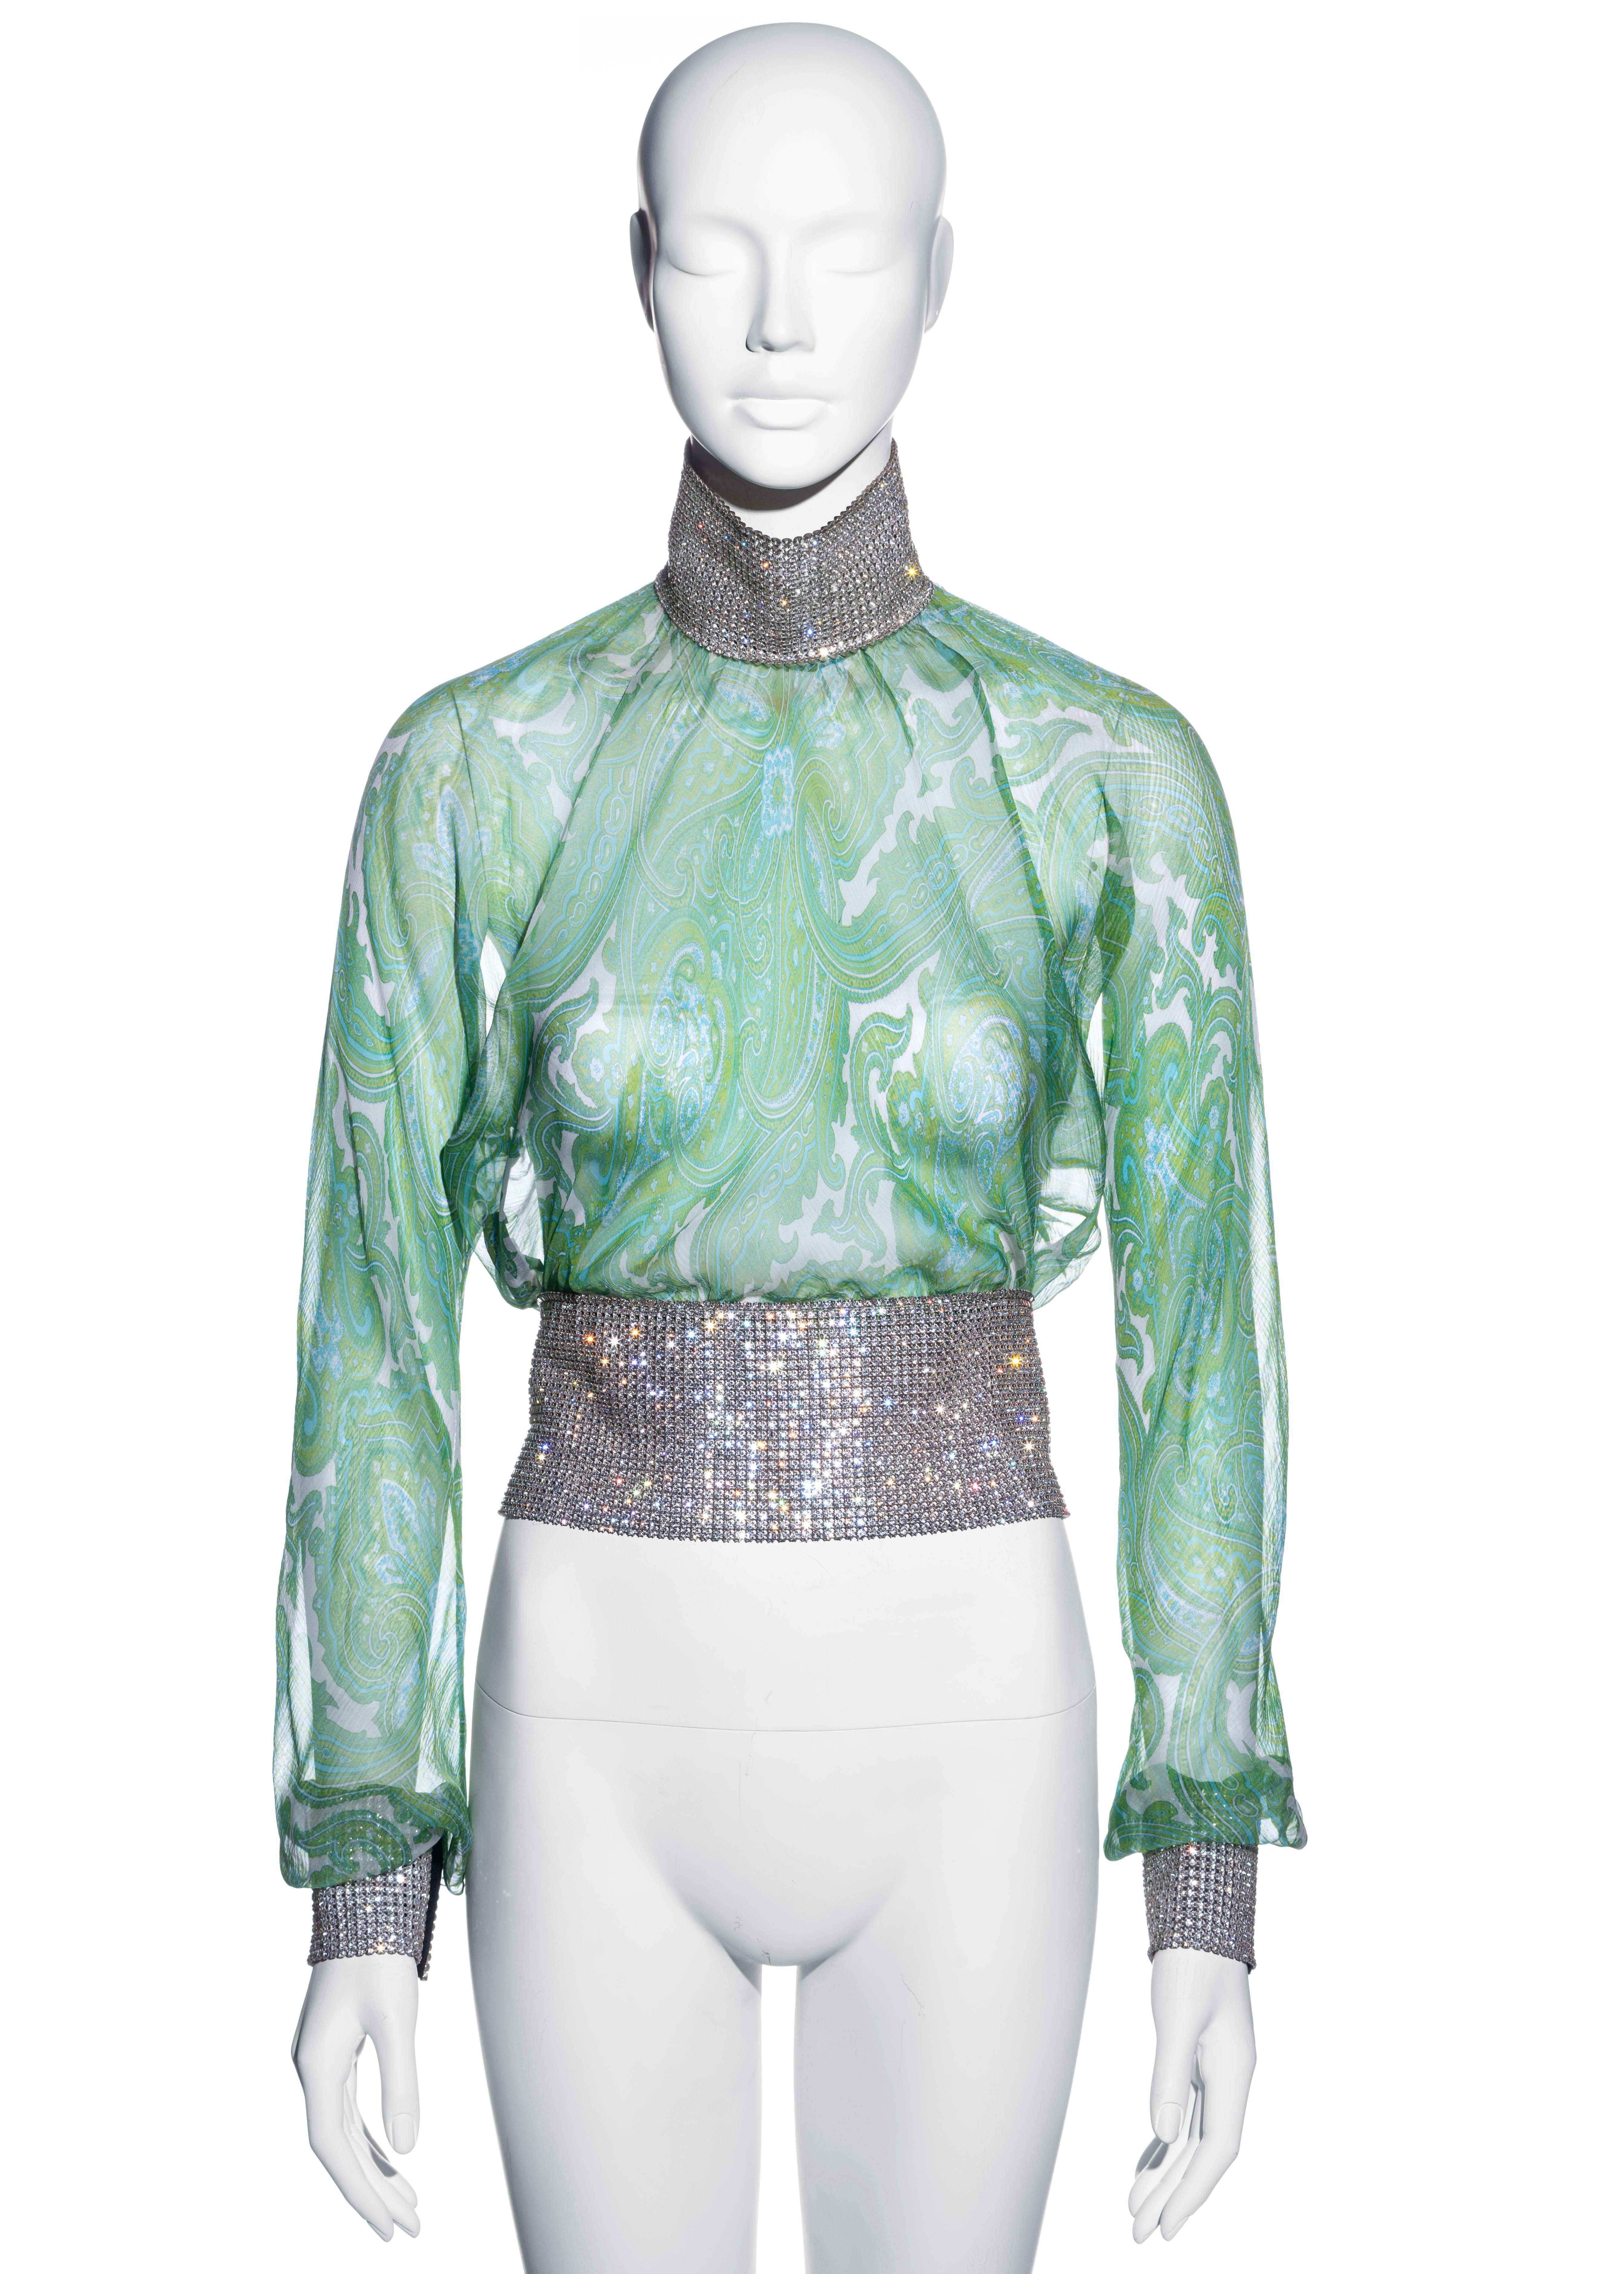 ▪ Dolce & Gabbana green paisley silk blouse
▪ 100% Silk 
▪ Large rhinestone mesh choker collar, cuffs and waistband 
▪ Velcro closures 
▪ IT 44 - FR 40 - UK 12 - US 8
▪ Spring-Summer 2000